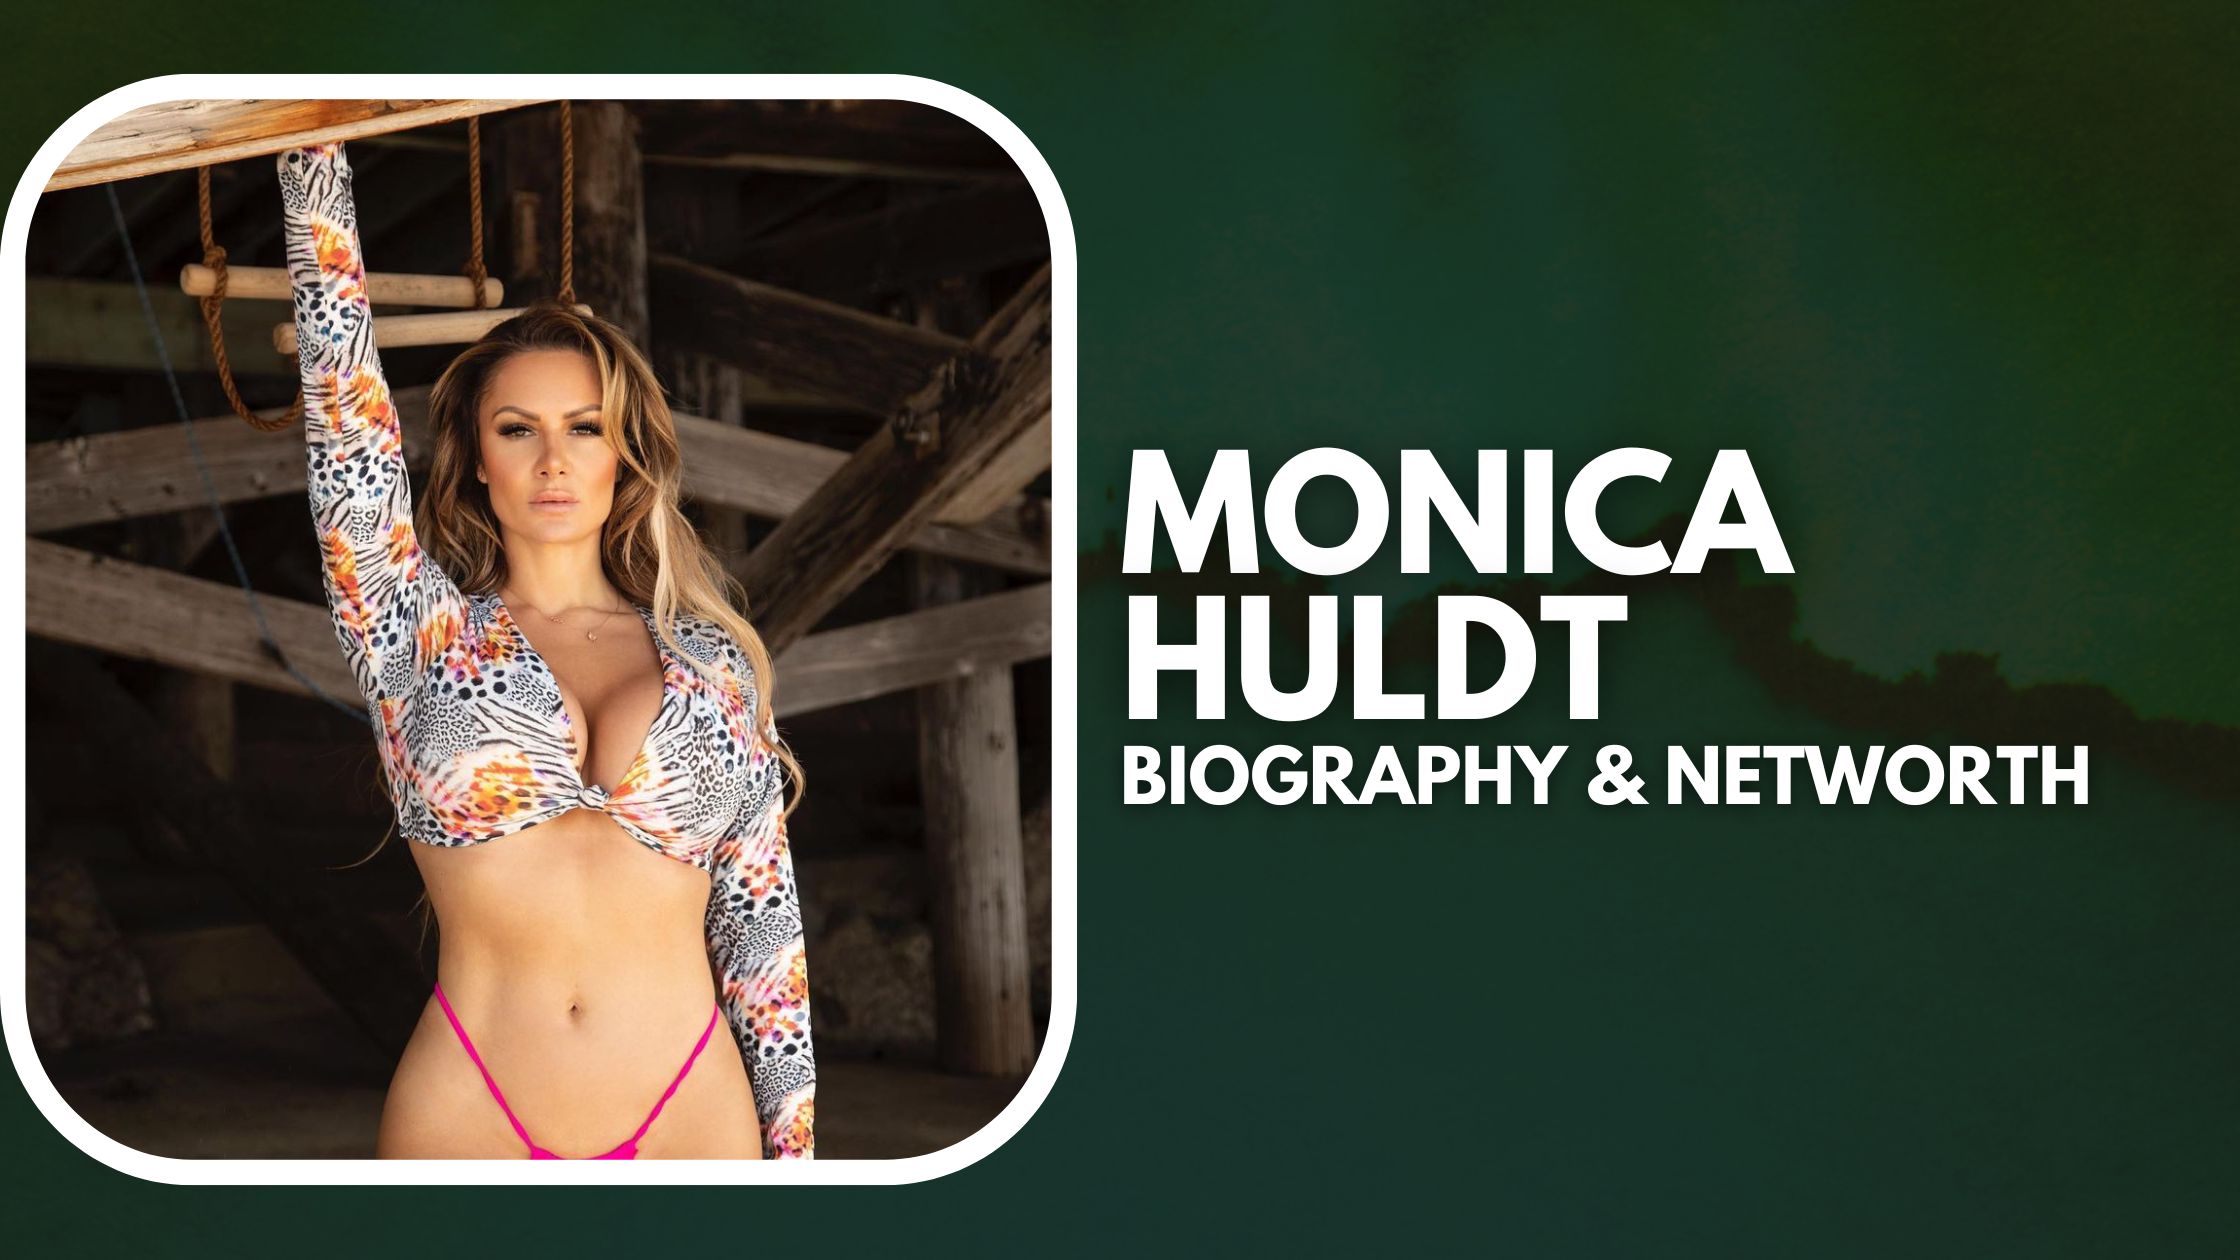 Monica Huldt biography & Networth